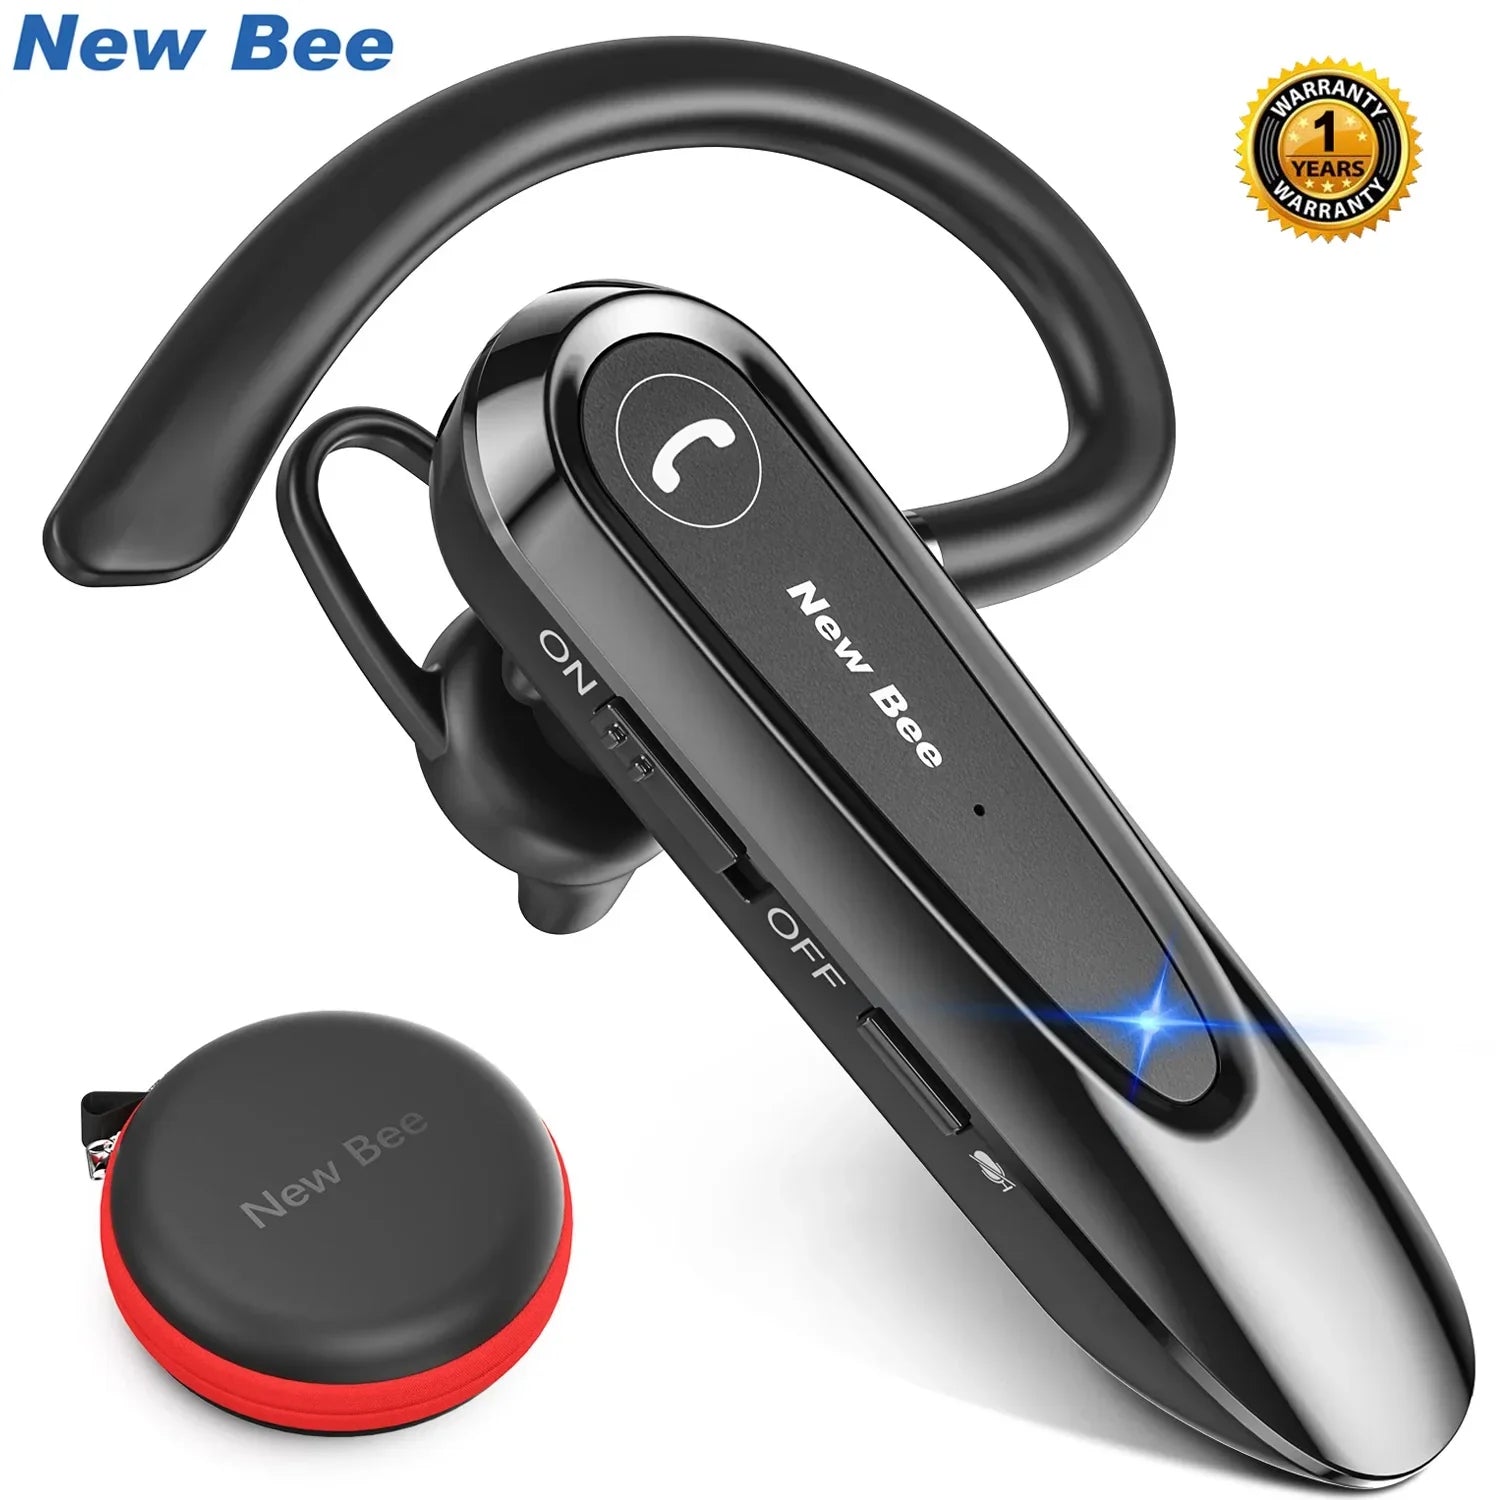 New Bee B45 Bluetooth Headset: Premium Sound & Noise Cancelling Technology  ourlum.com   